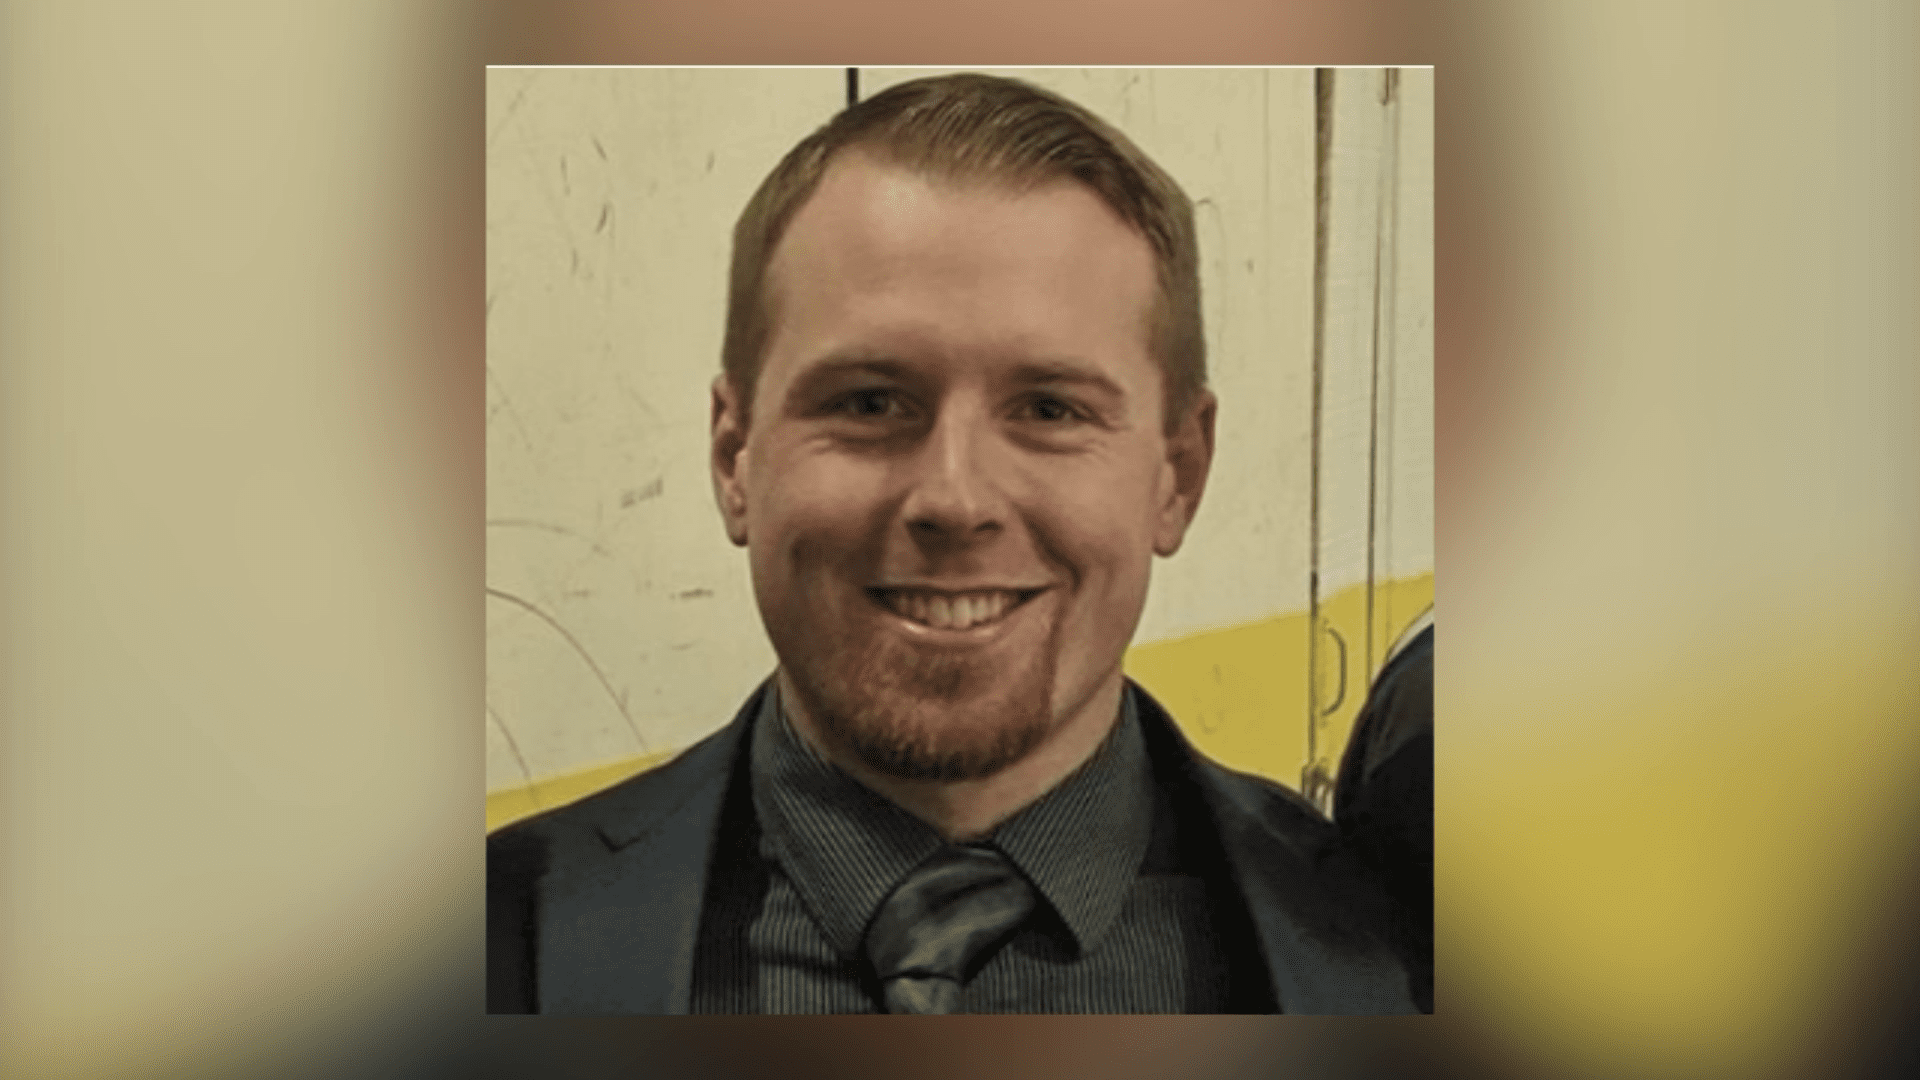 Shane Buckley becomes Northland College new men's hockey head coach